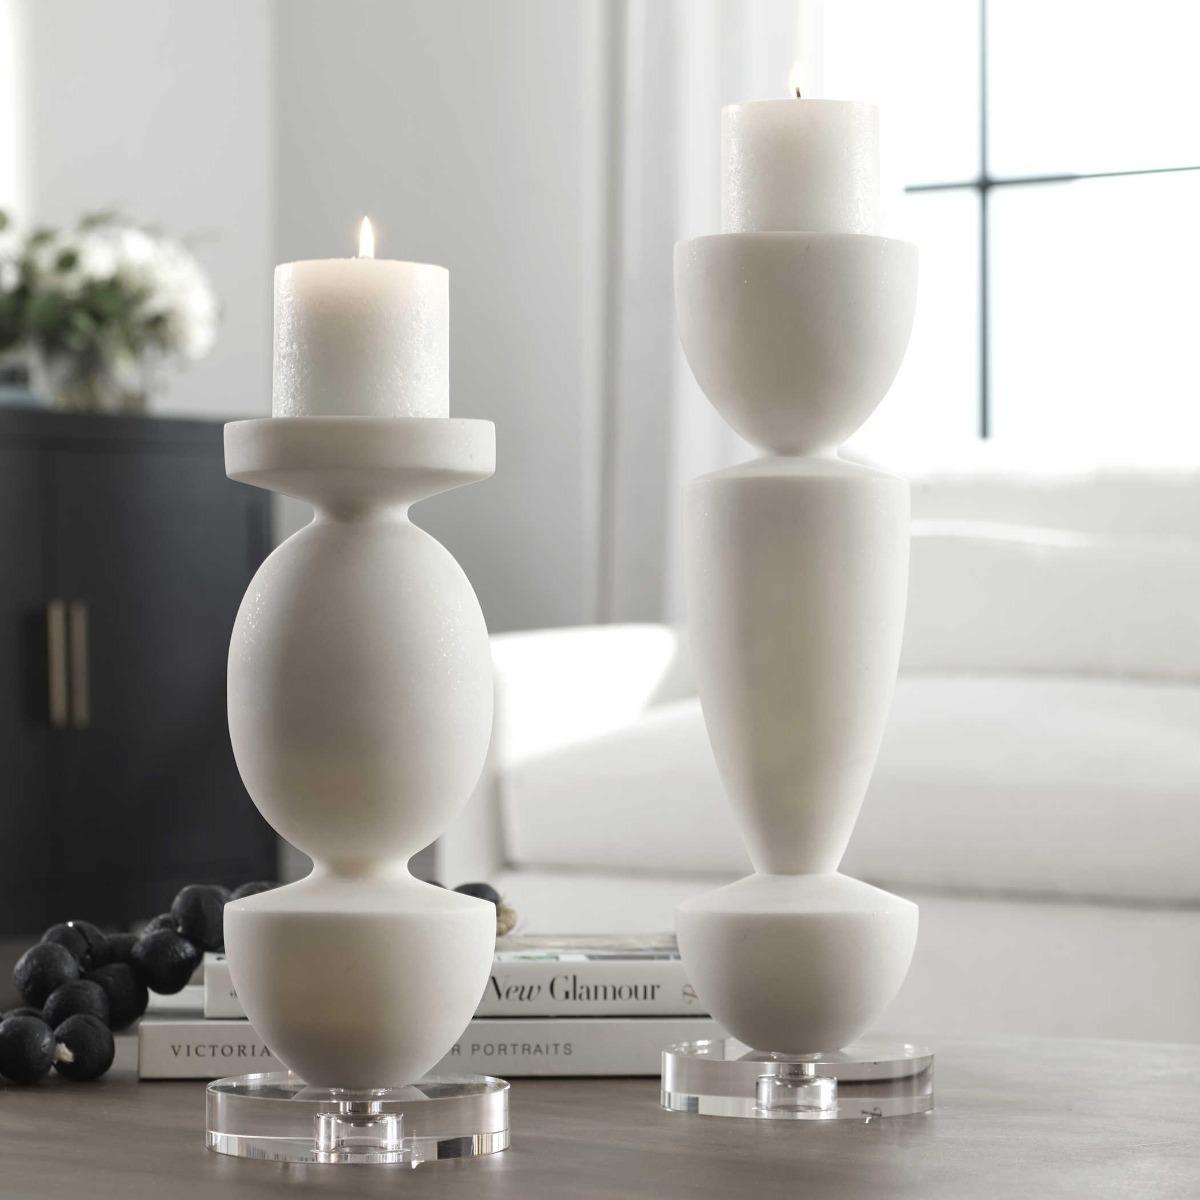 Uttermost Lido White Stone Candleholders | Set of 2